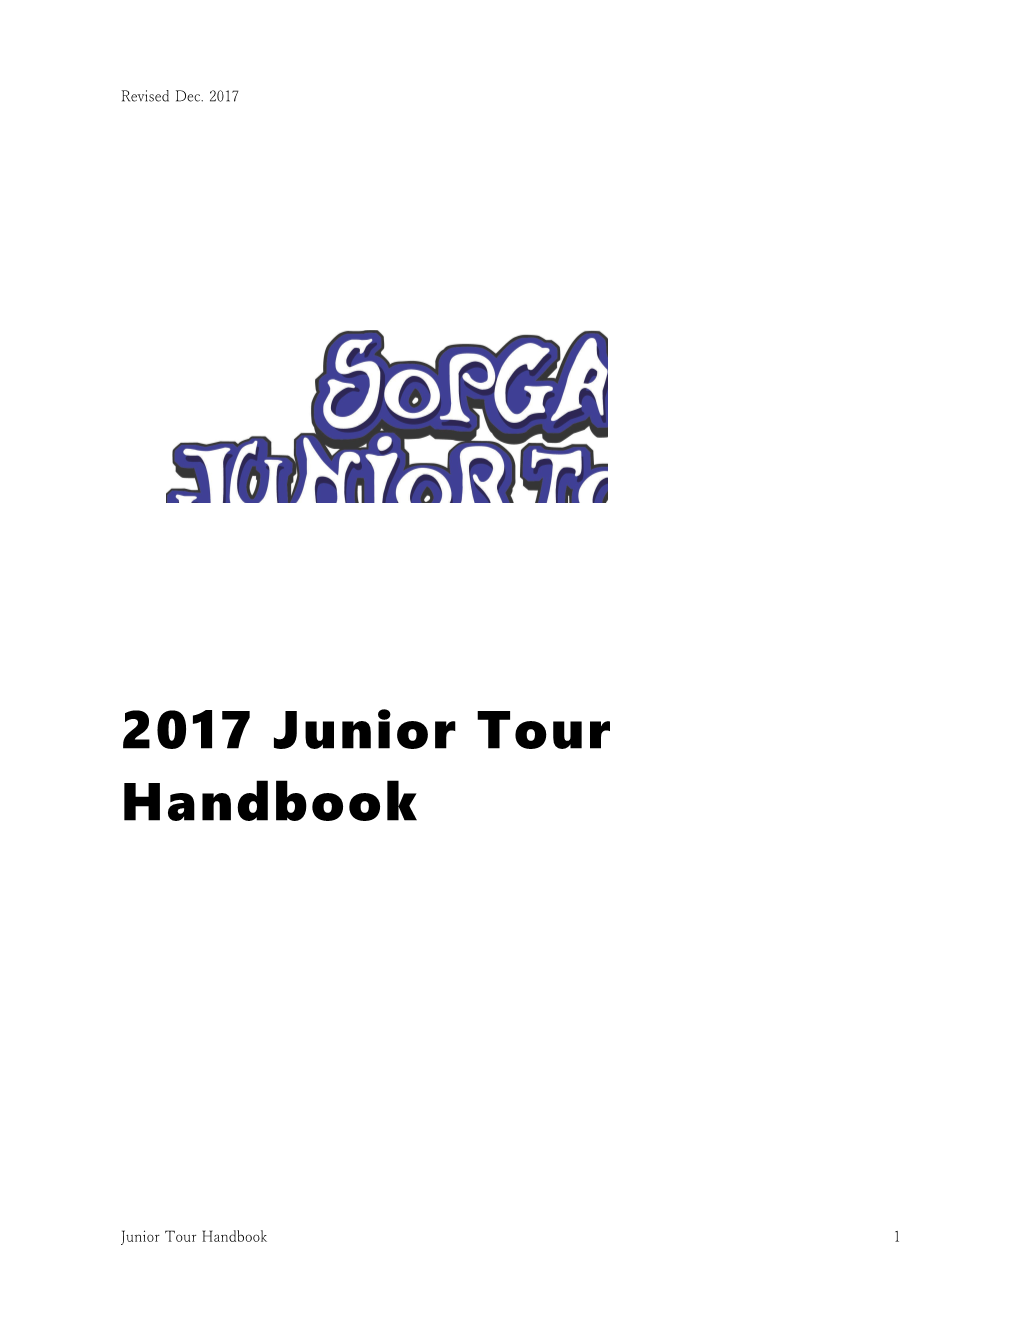 2017 Junior Tour Handbook